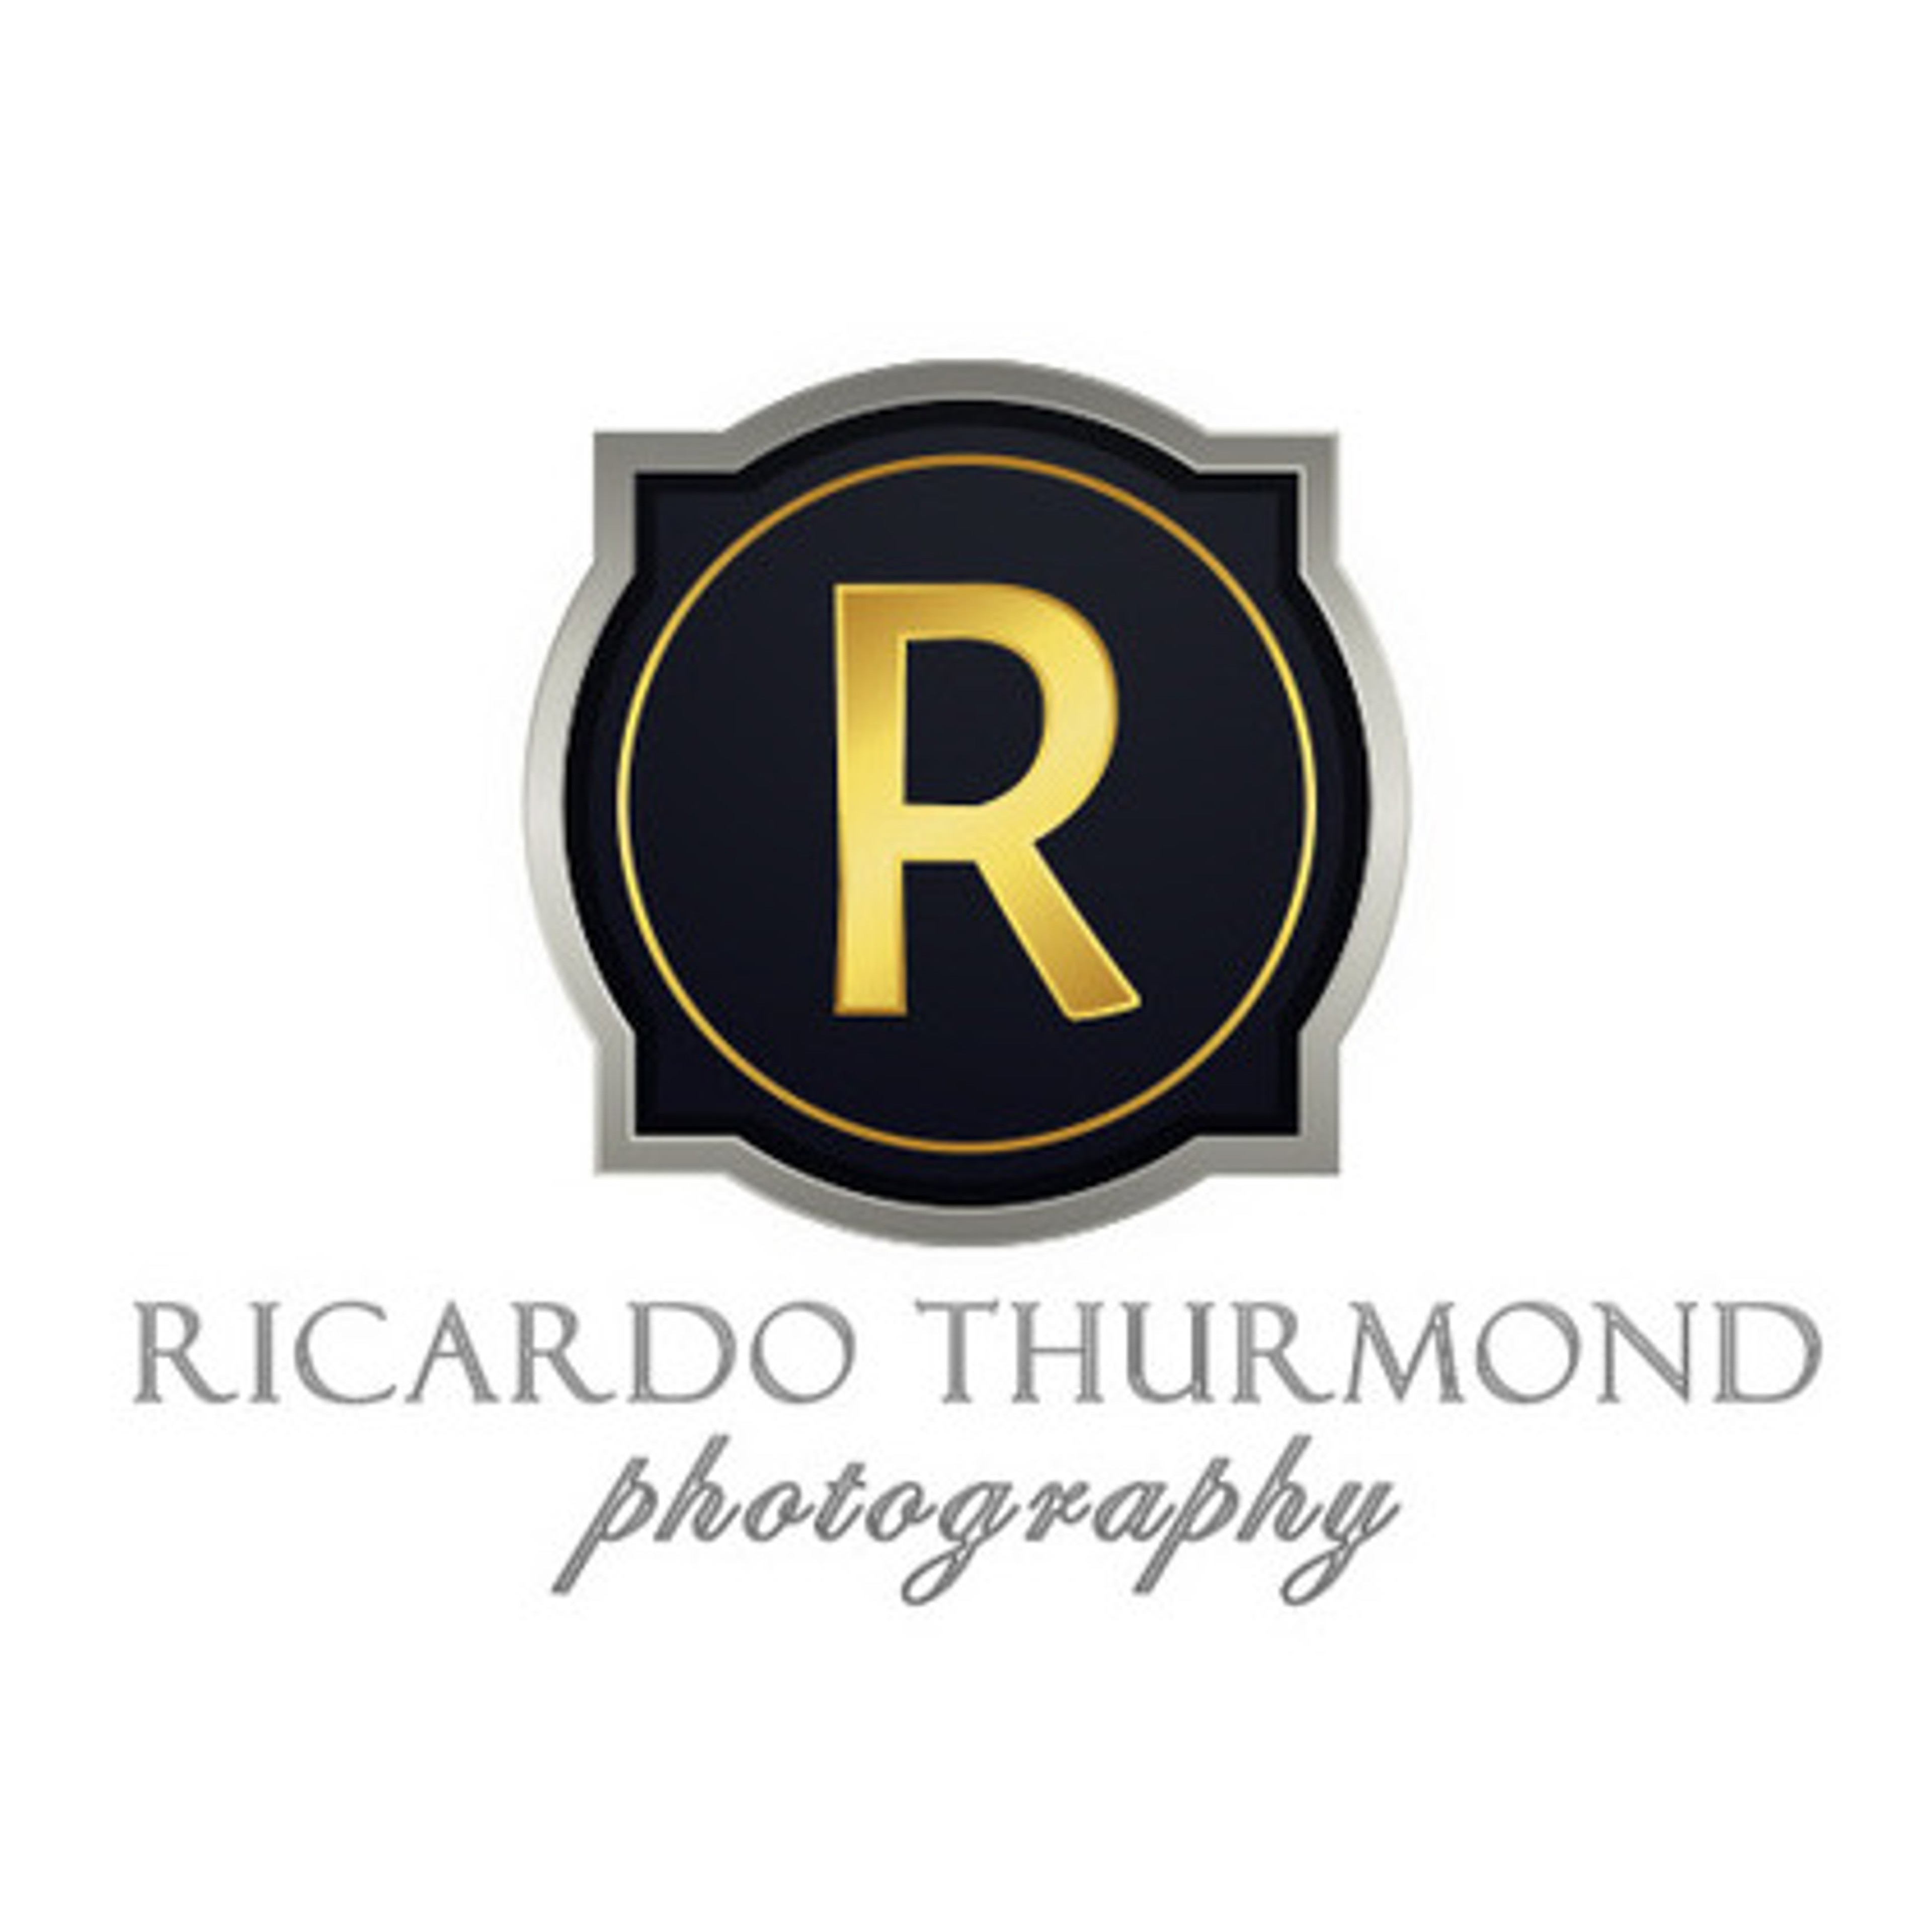 Ricardo Thurmond Photography "Explore Capture Shoot"